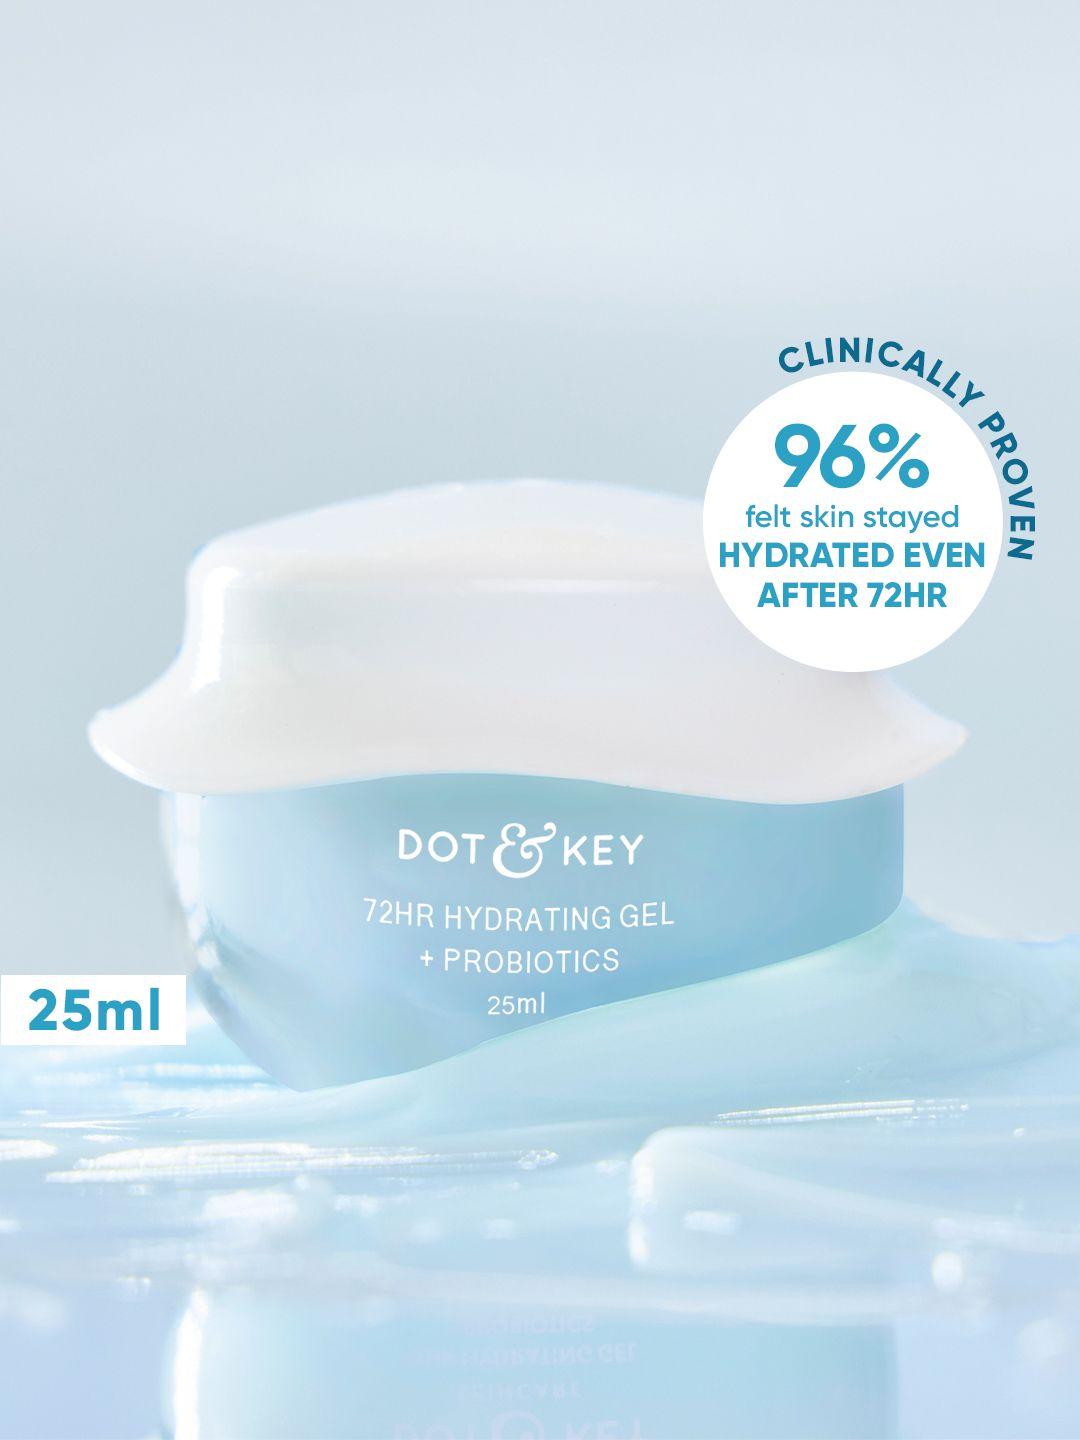 dot & key 72hr hydrating probiotics oil-free gel moisturizer with hyaluronic acid - 25ml